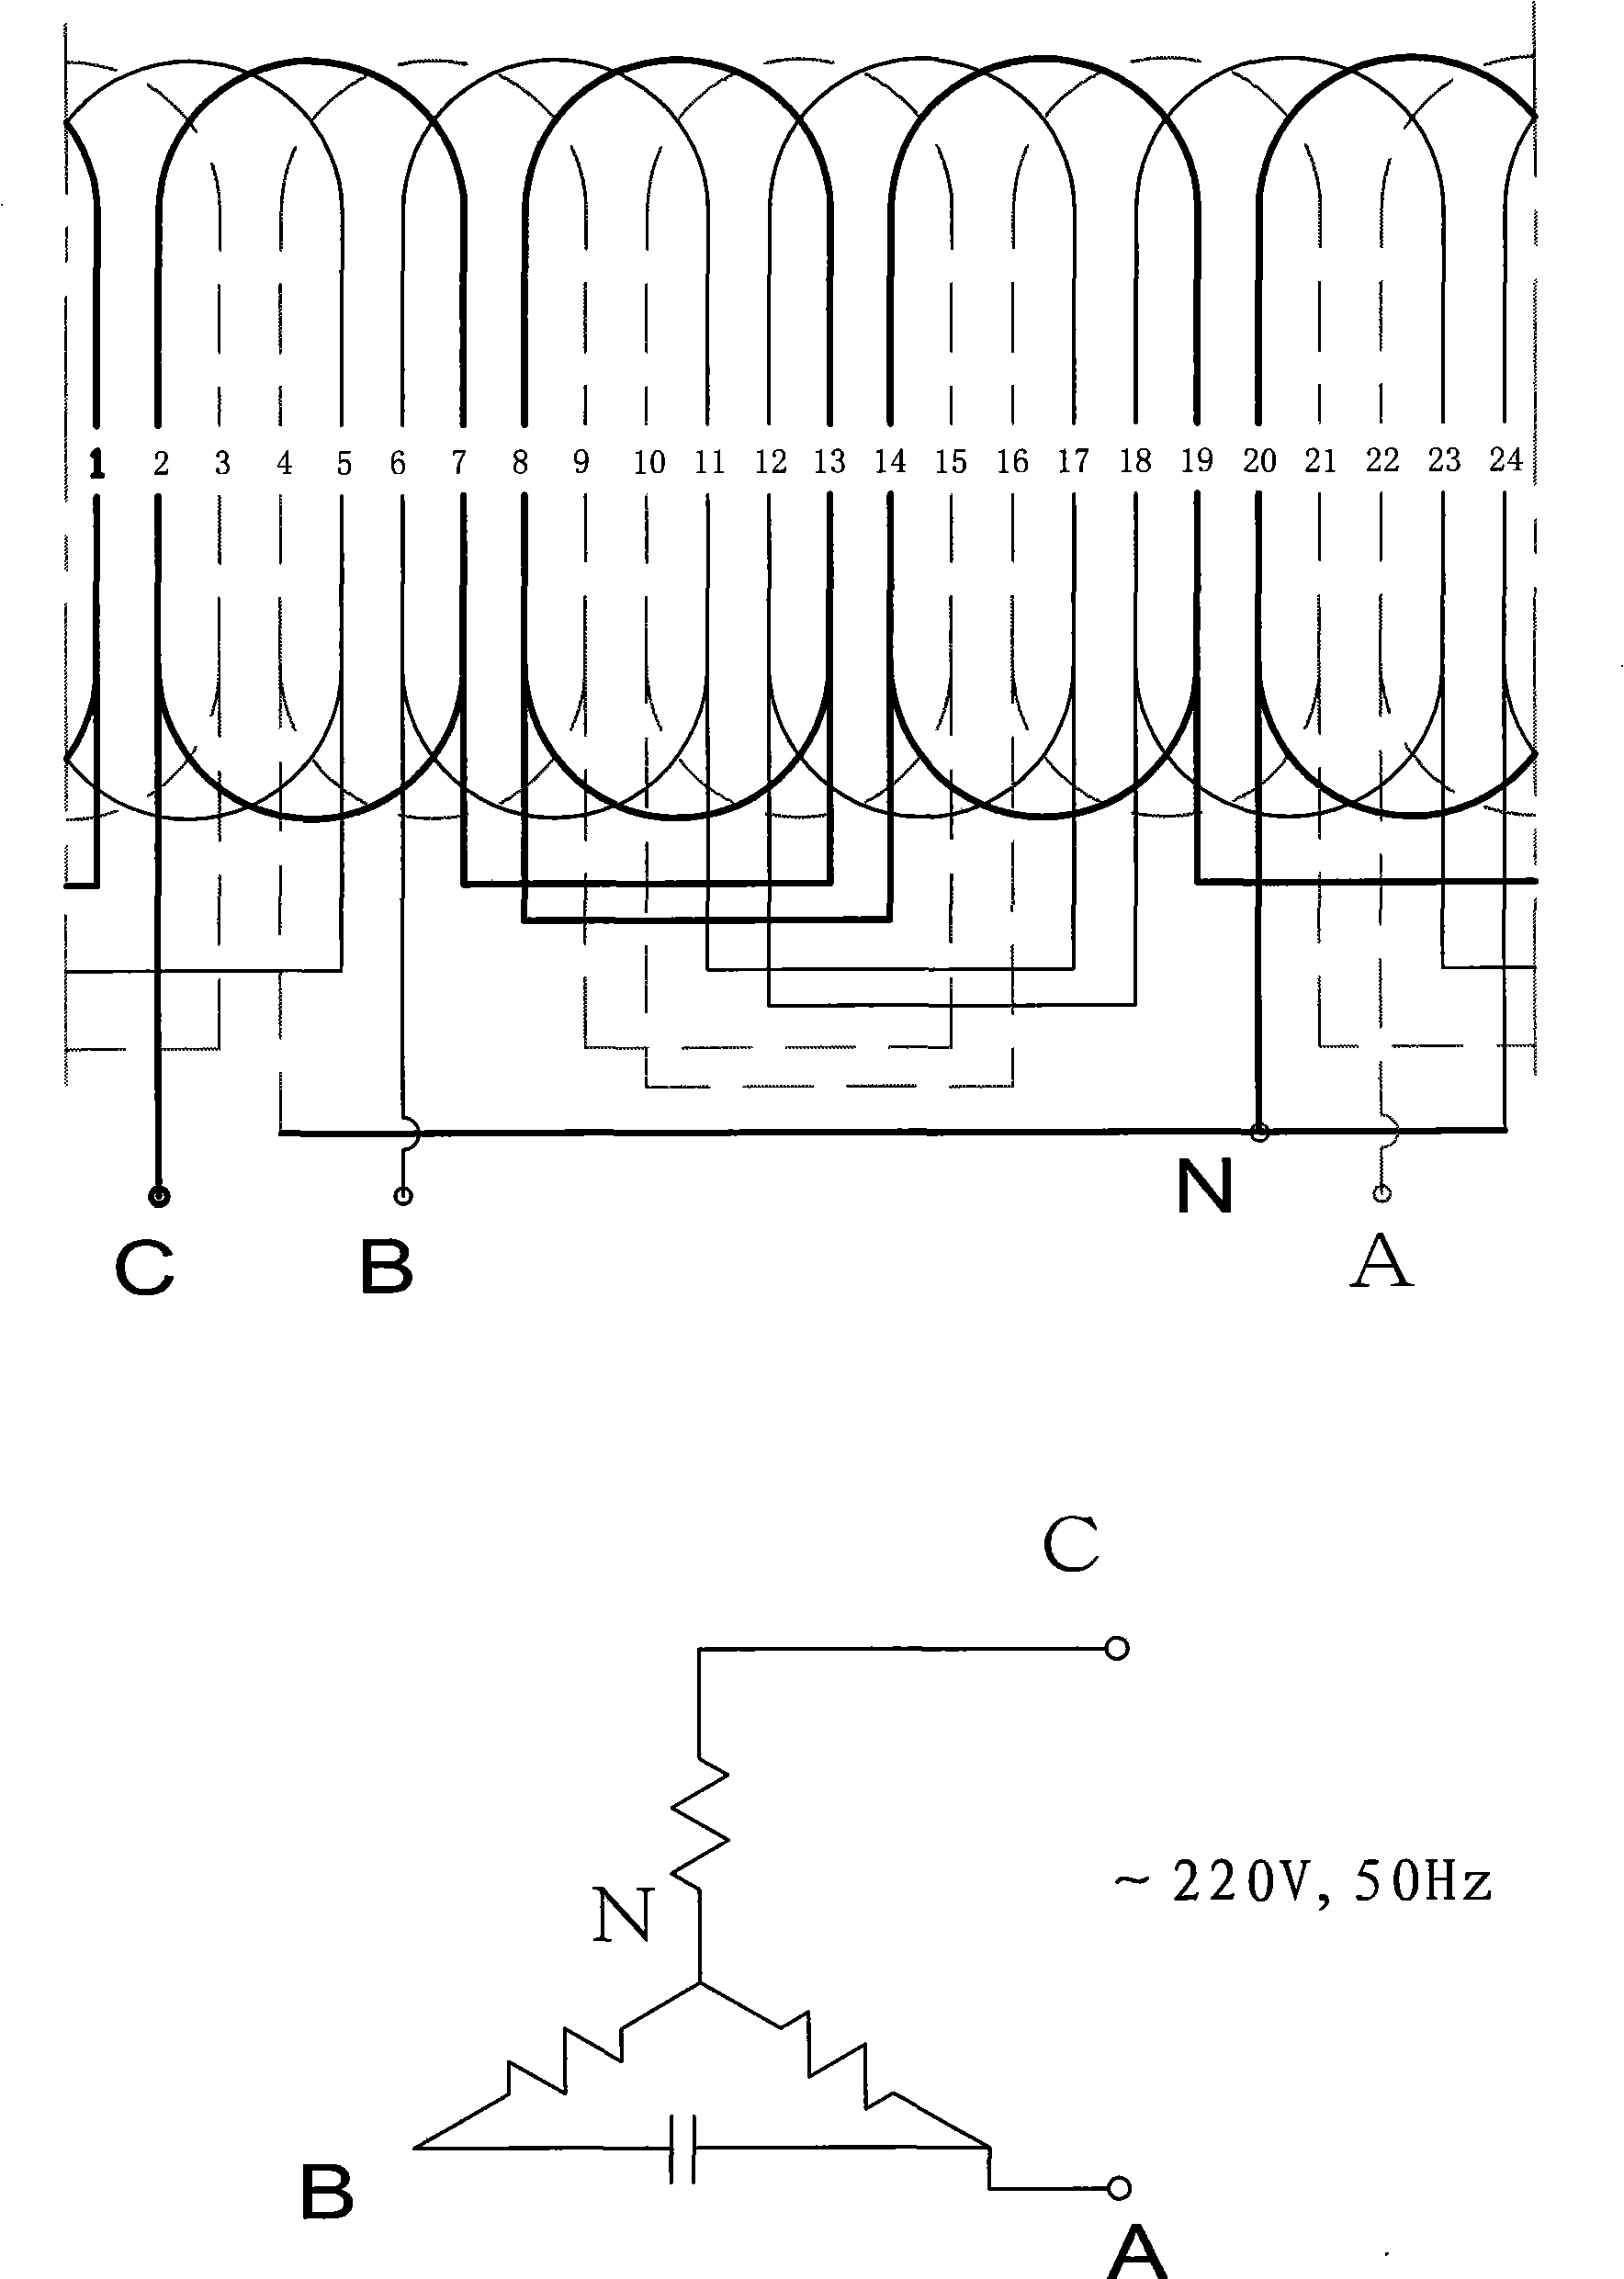 Electromagnetic design method for Y-wiring single phase capacitance run motor